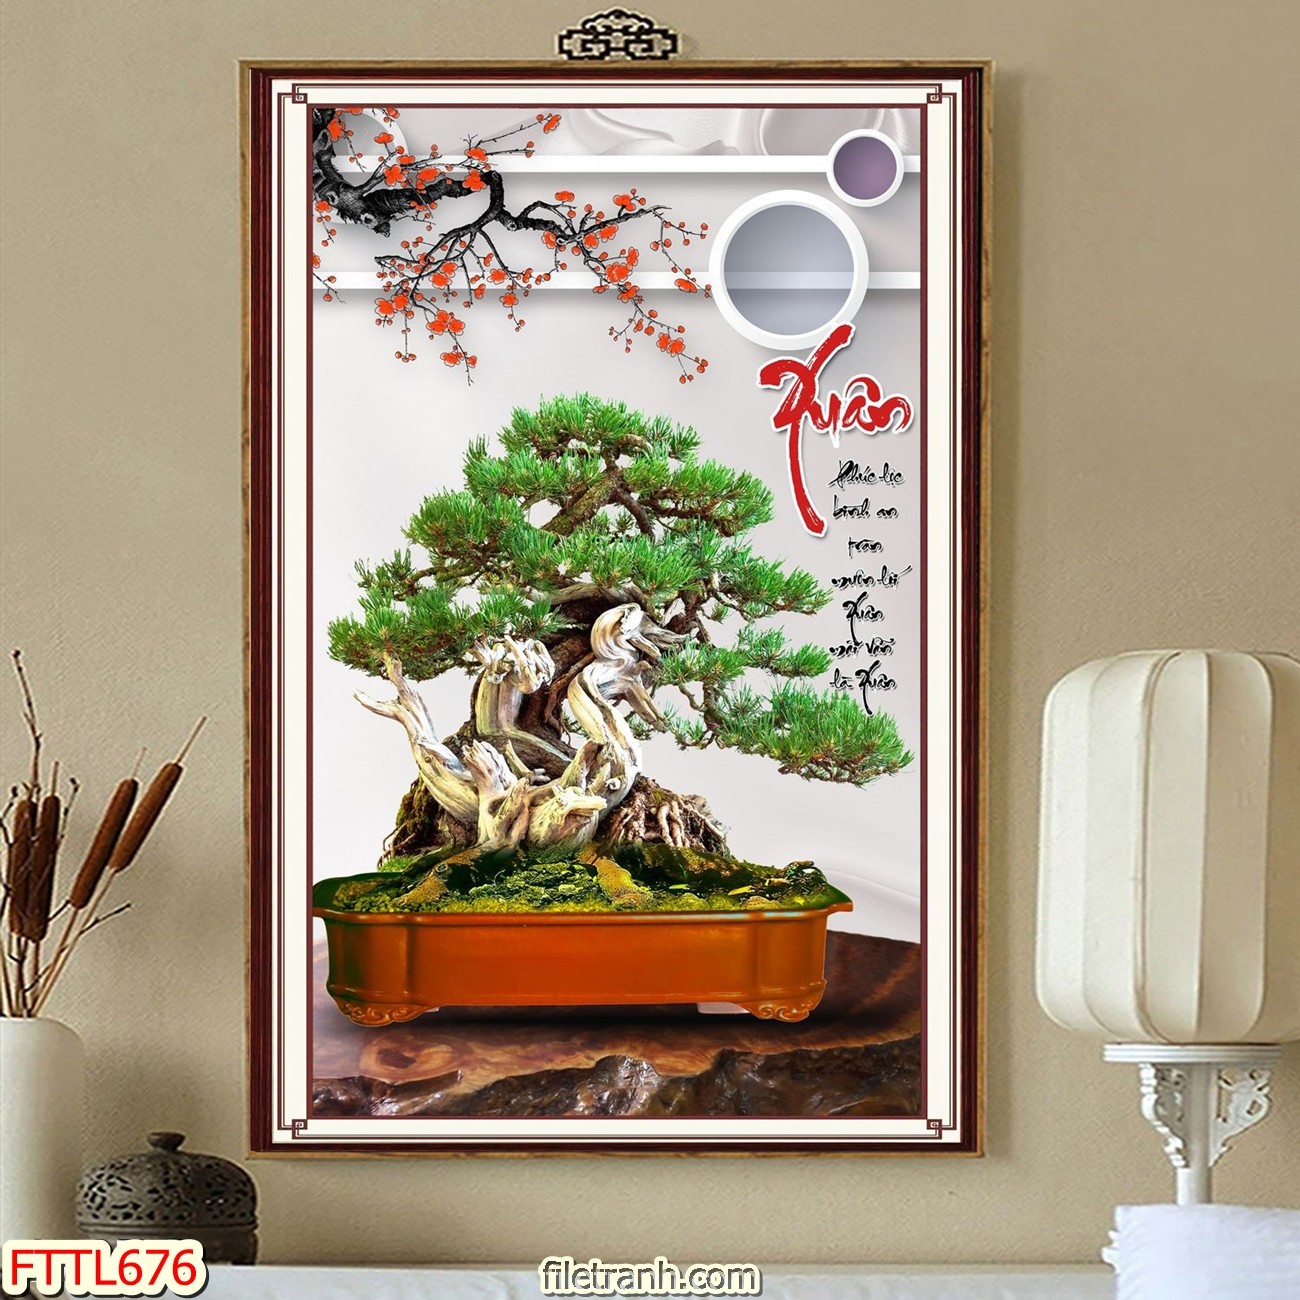 https://filetranh.com/file-tranh-chau-mai-bonsai/file-tranh-chau-mai-bonsai-fttl676.html